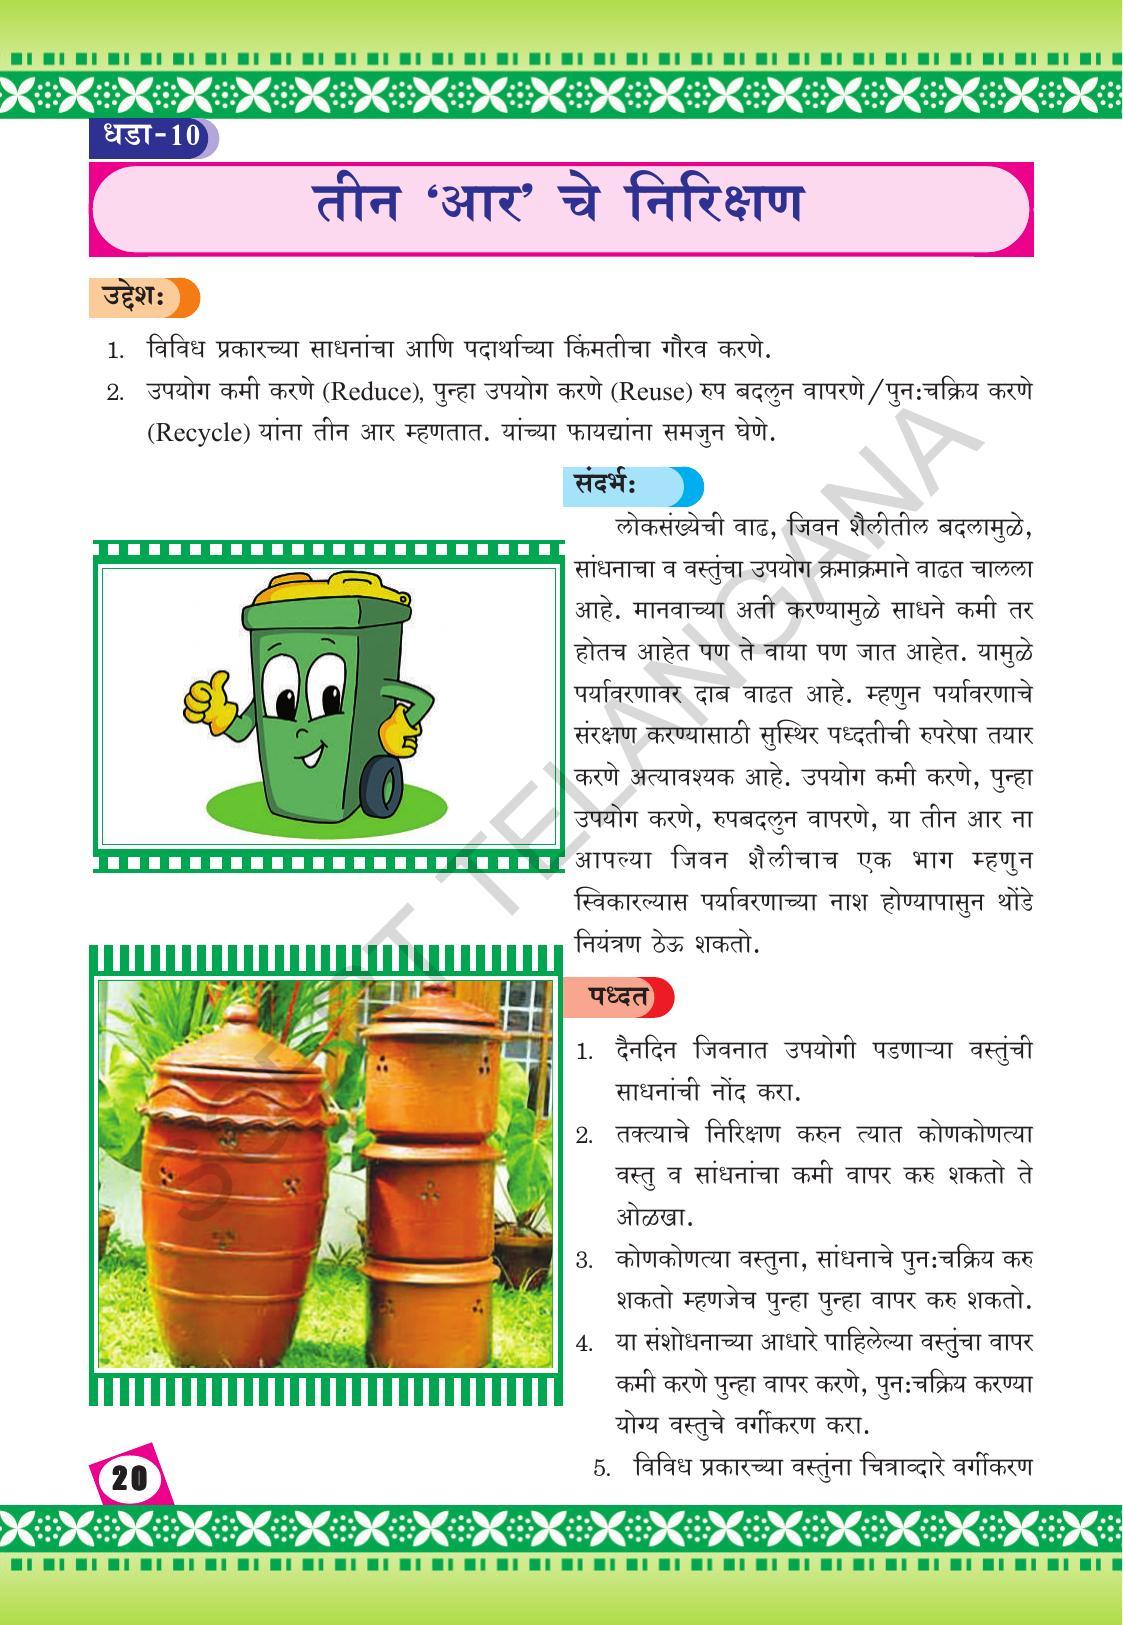 TS SCERT Class 10 Social Environmental Education (Marathi Medium) Text Book - Page 28